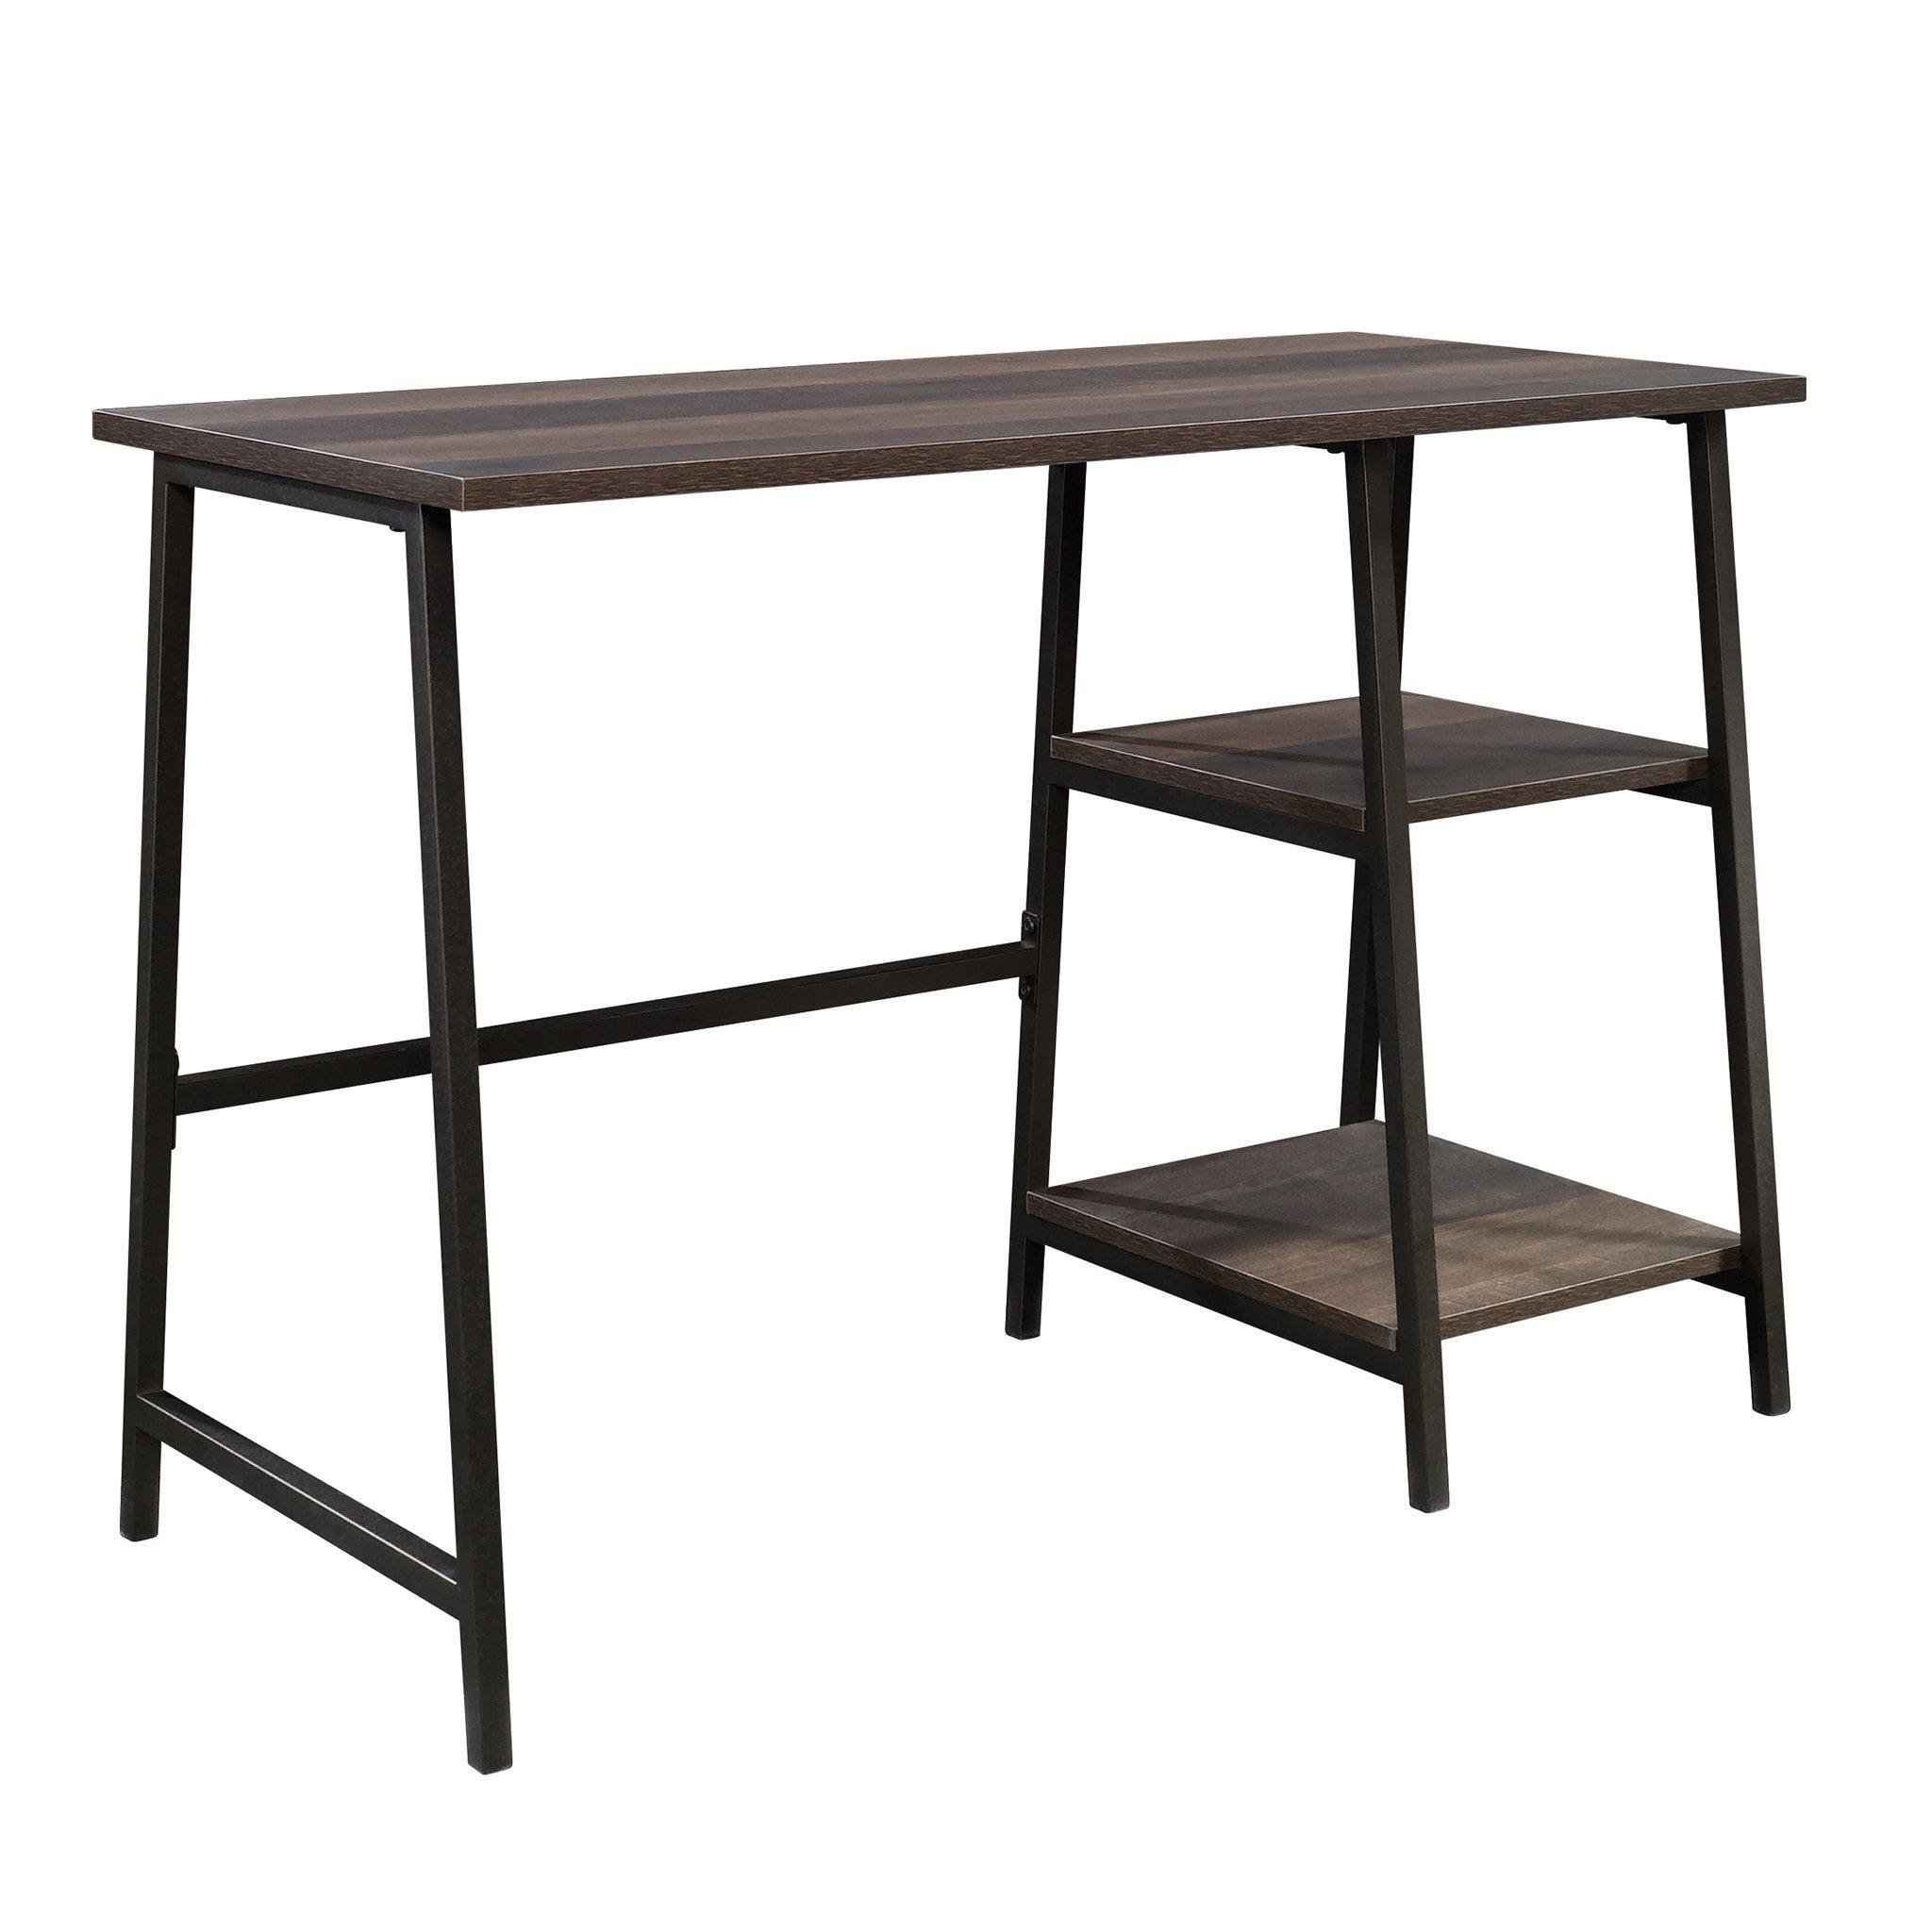 Industrial style bench desk smoked oak - crimblefest furniture - image 8